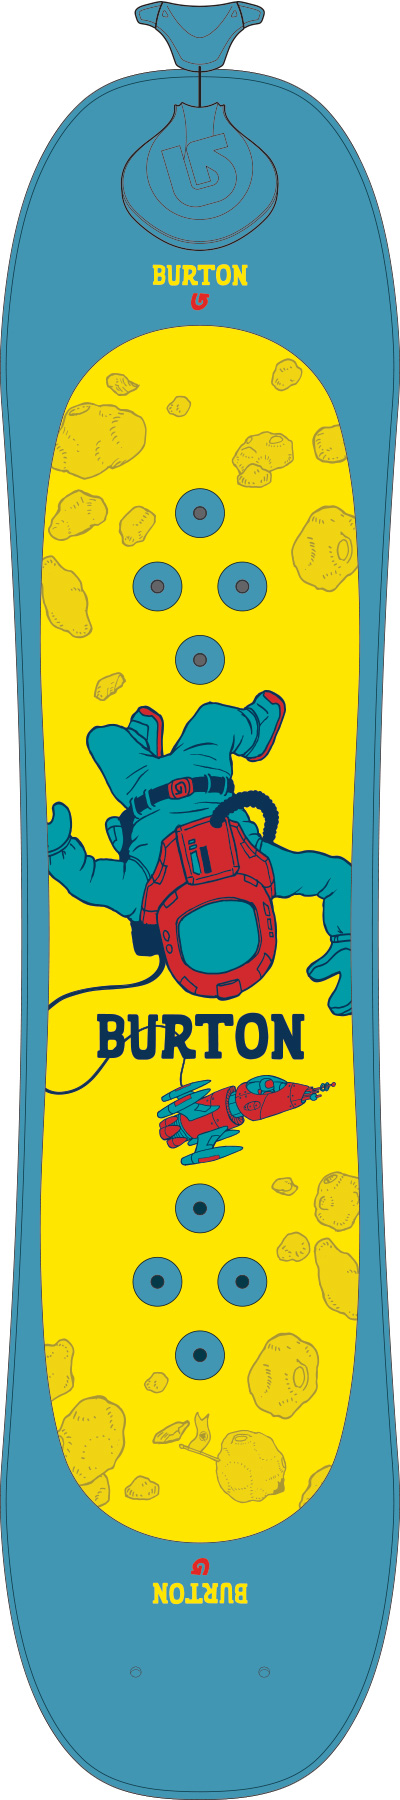 Burton Riglet Snowboard - Alter Ego Sports